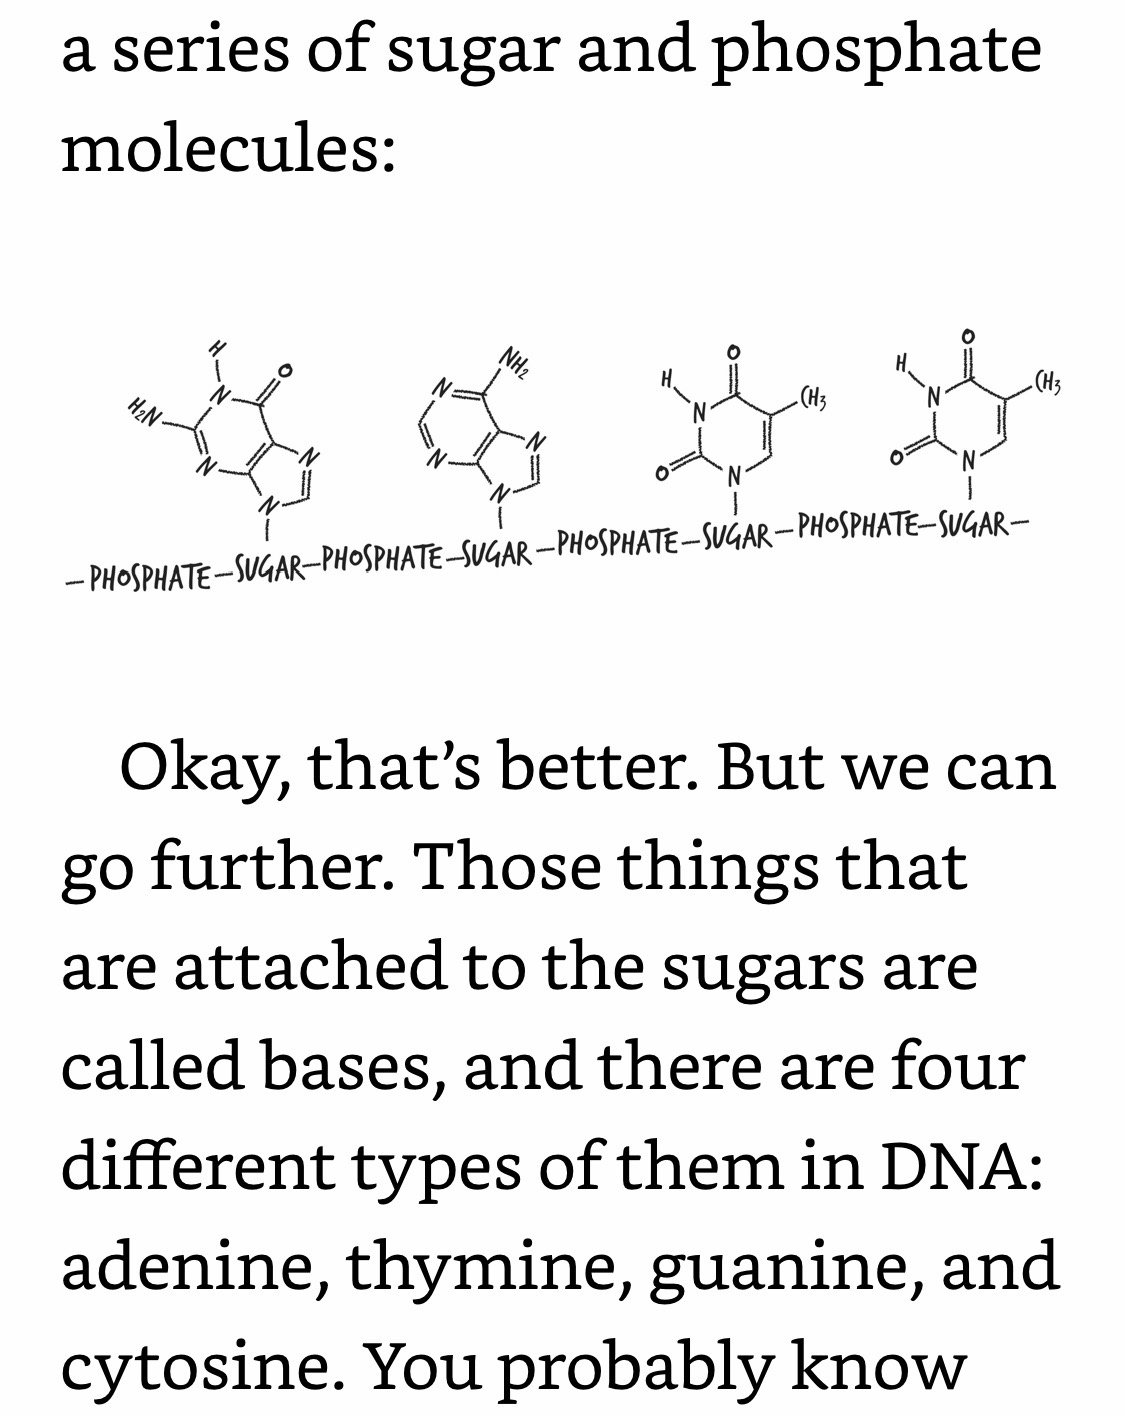 DNA Sugar and Phosphates.jpeg